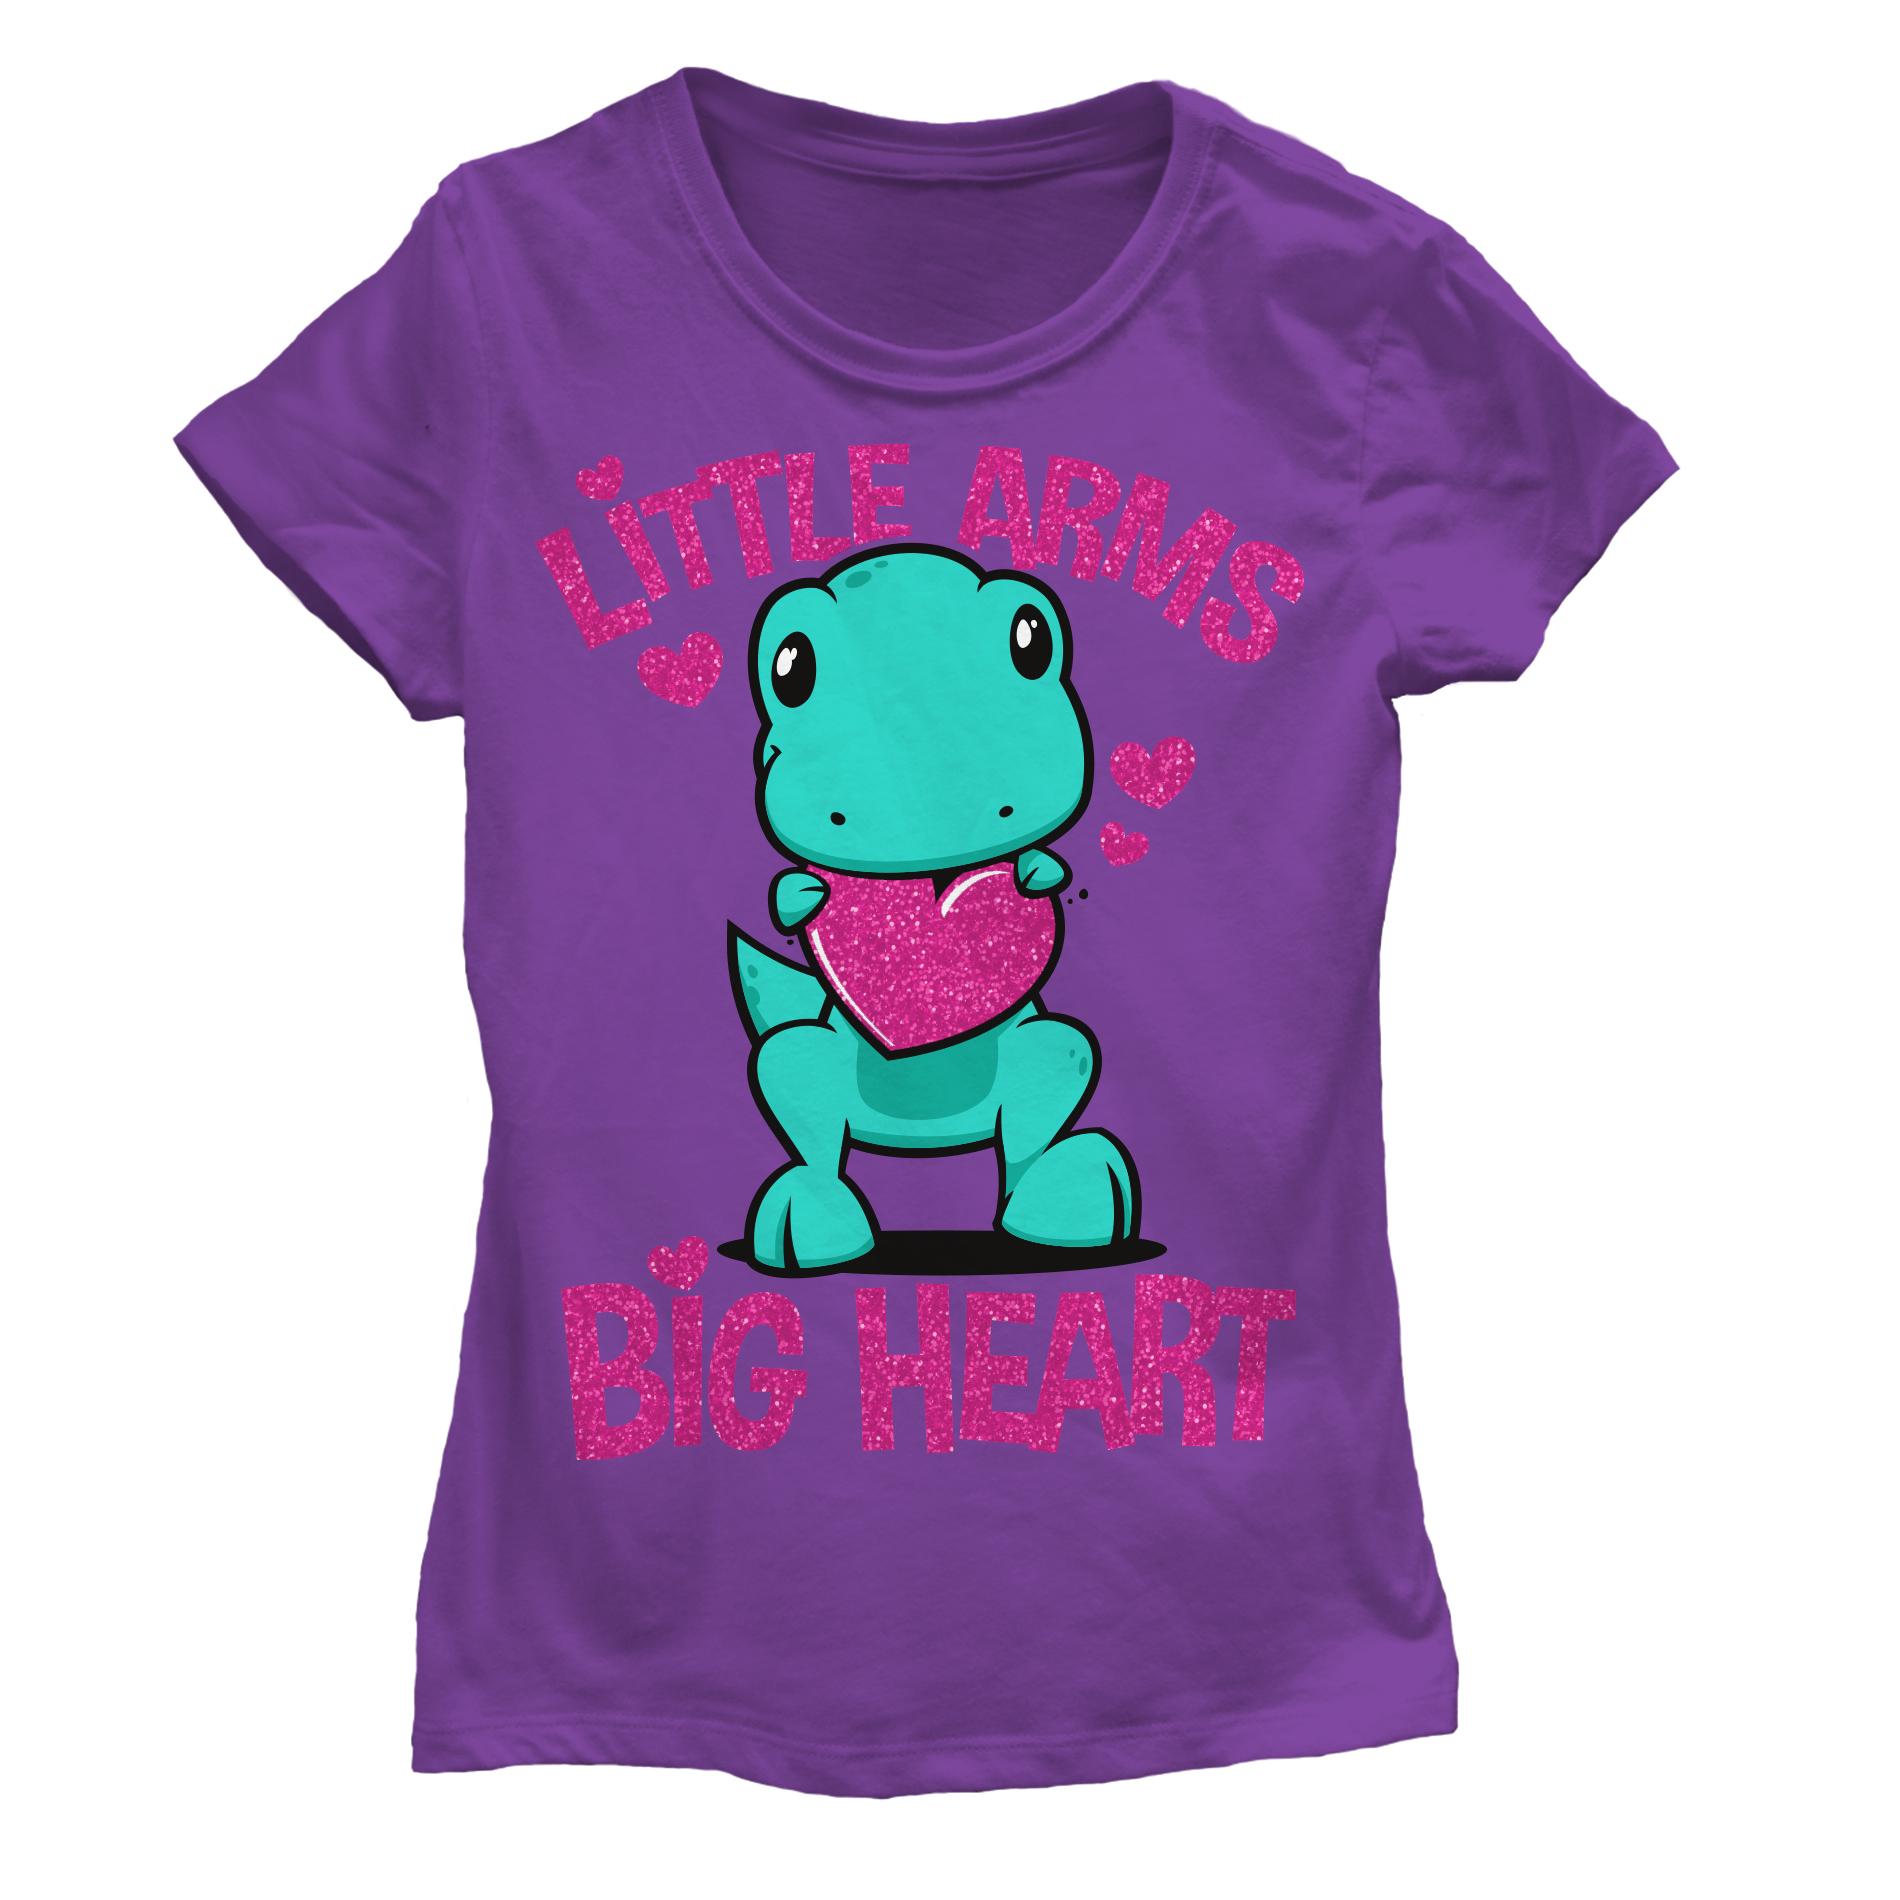 Hybrid Girl's Graphic T-Shirt - T-Rex